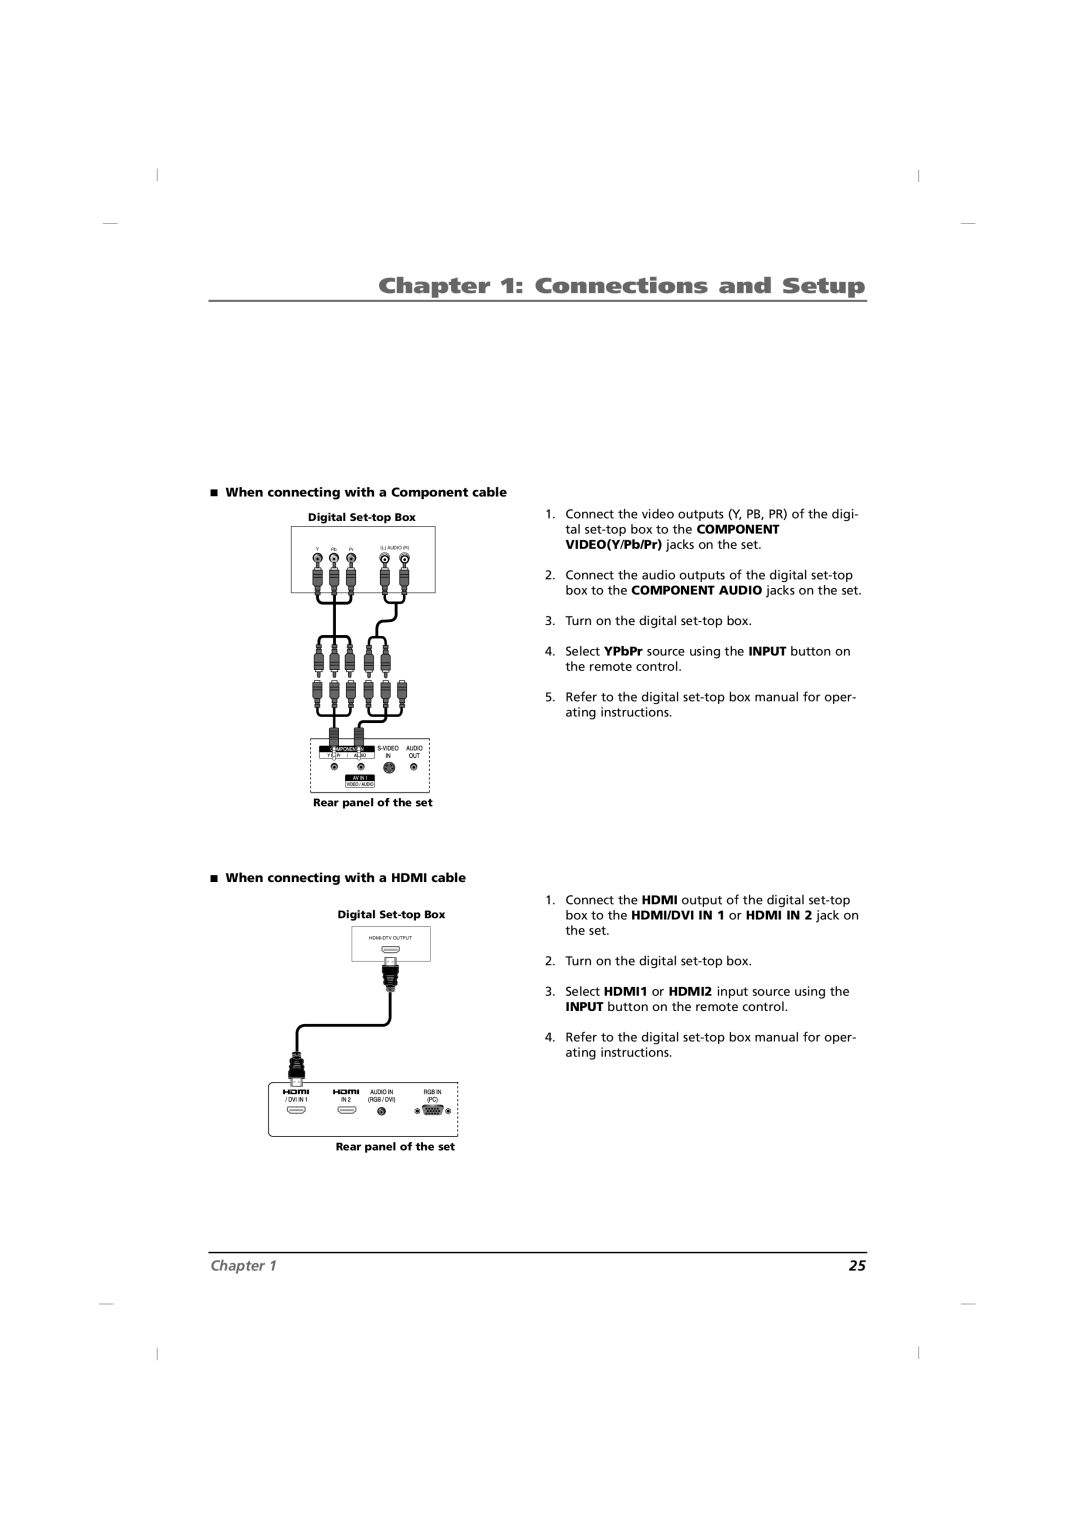 RCA J32CE720, J42CE820, J26CE820 manual Connections and Setup, Chapter 